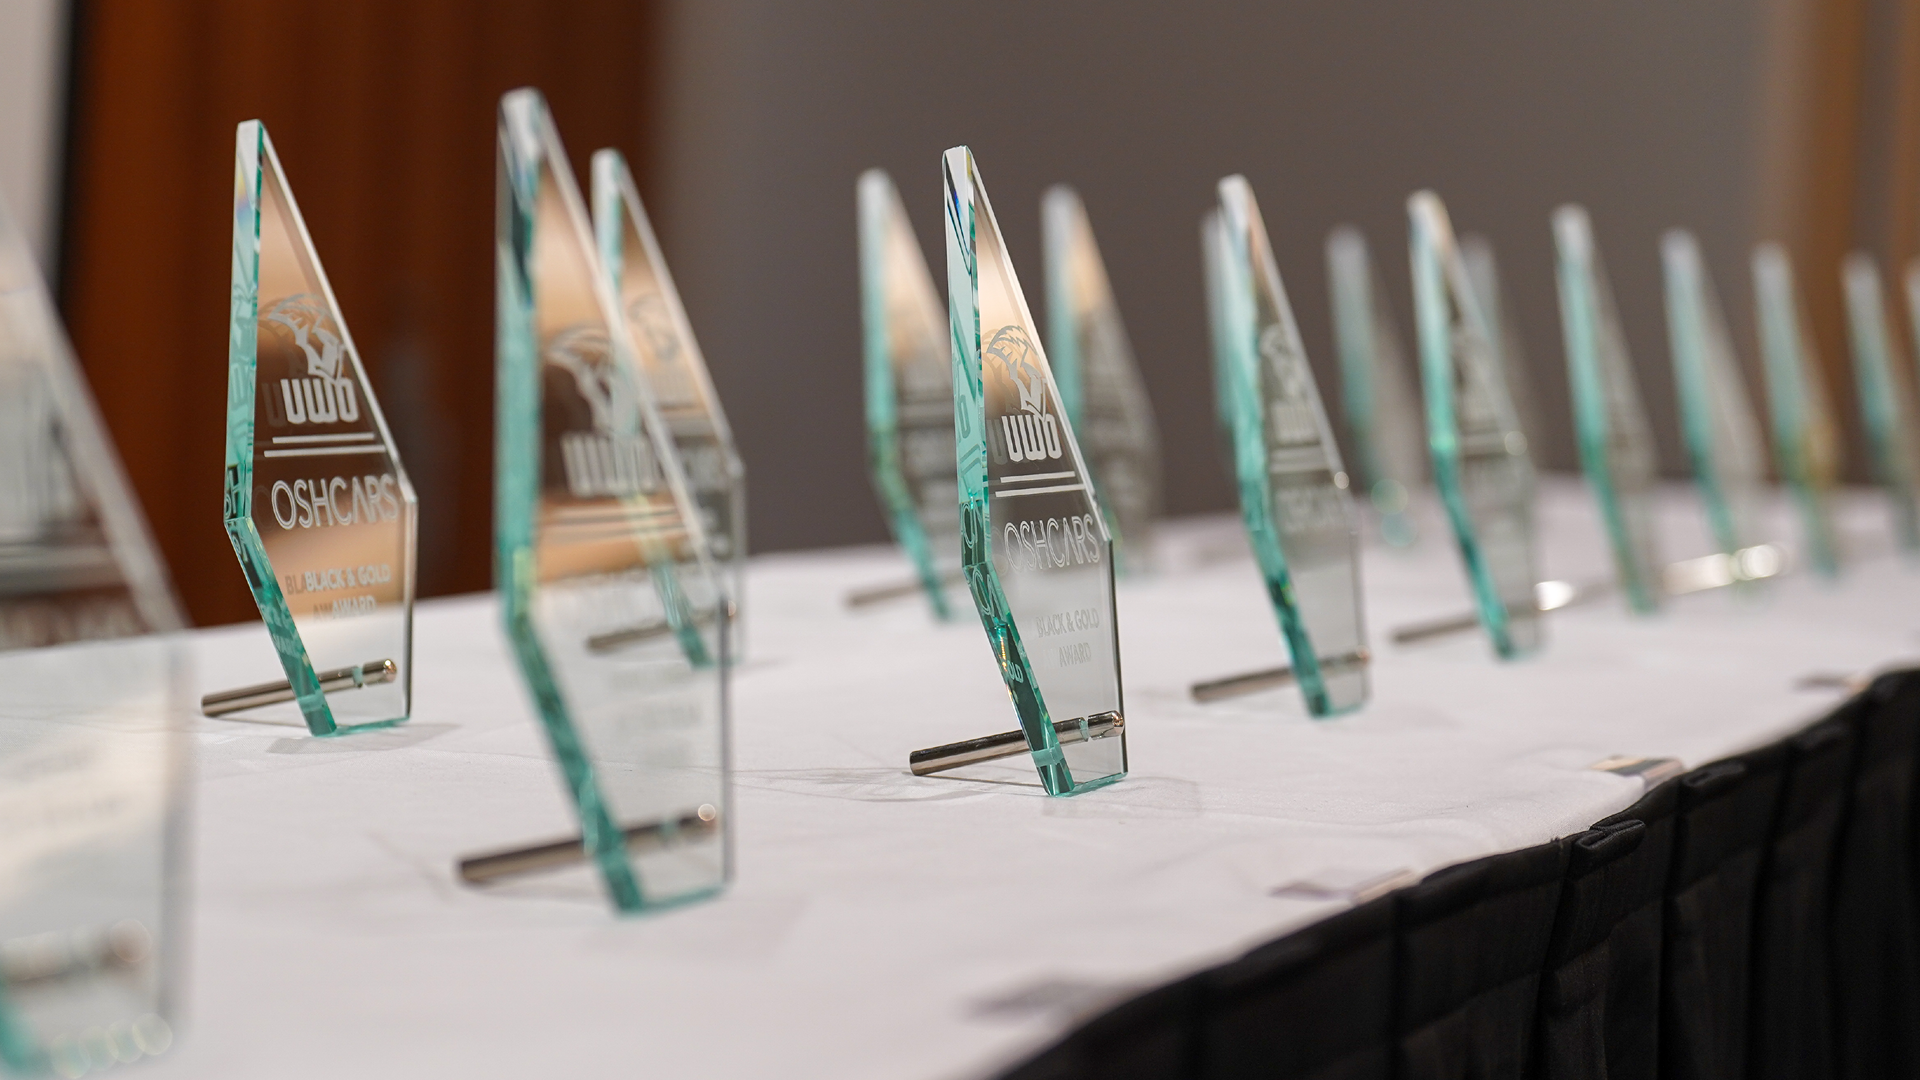 Seventh Annual Oshcars Award Winners Announced